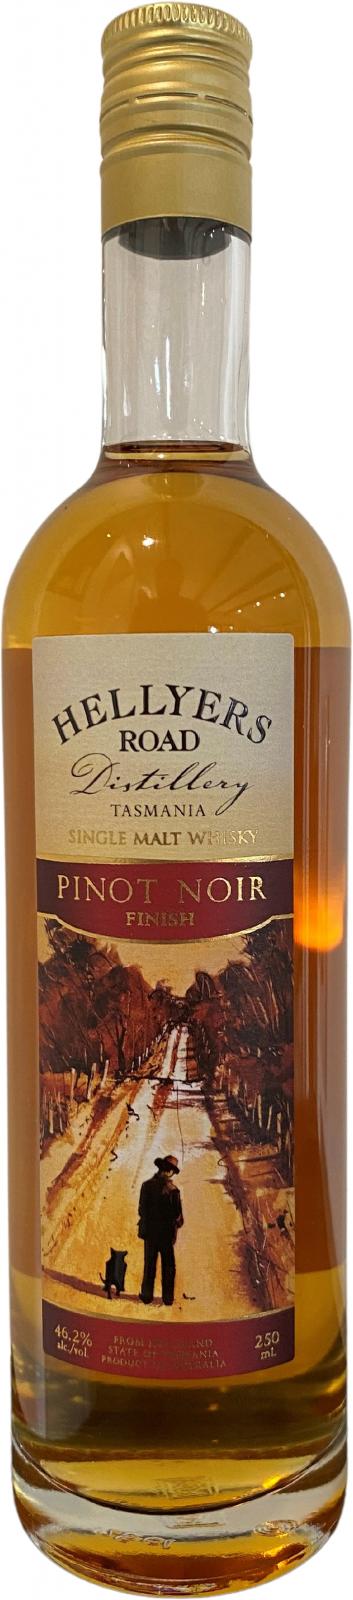 Hellyers Road Pinot Noir Finish 46.2% 250ml